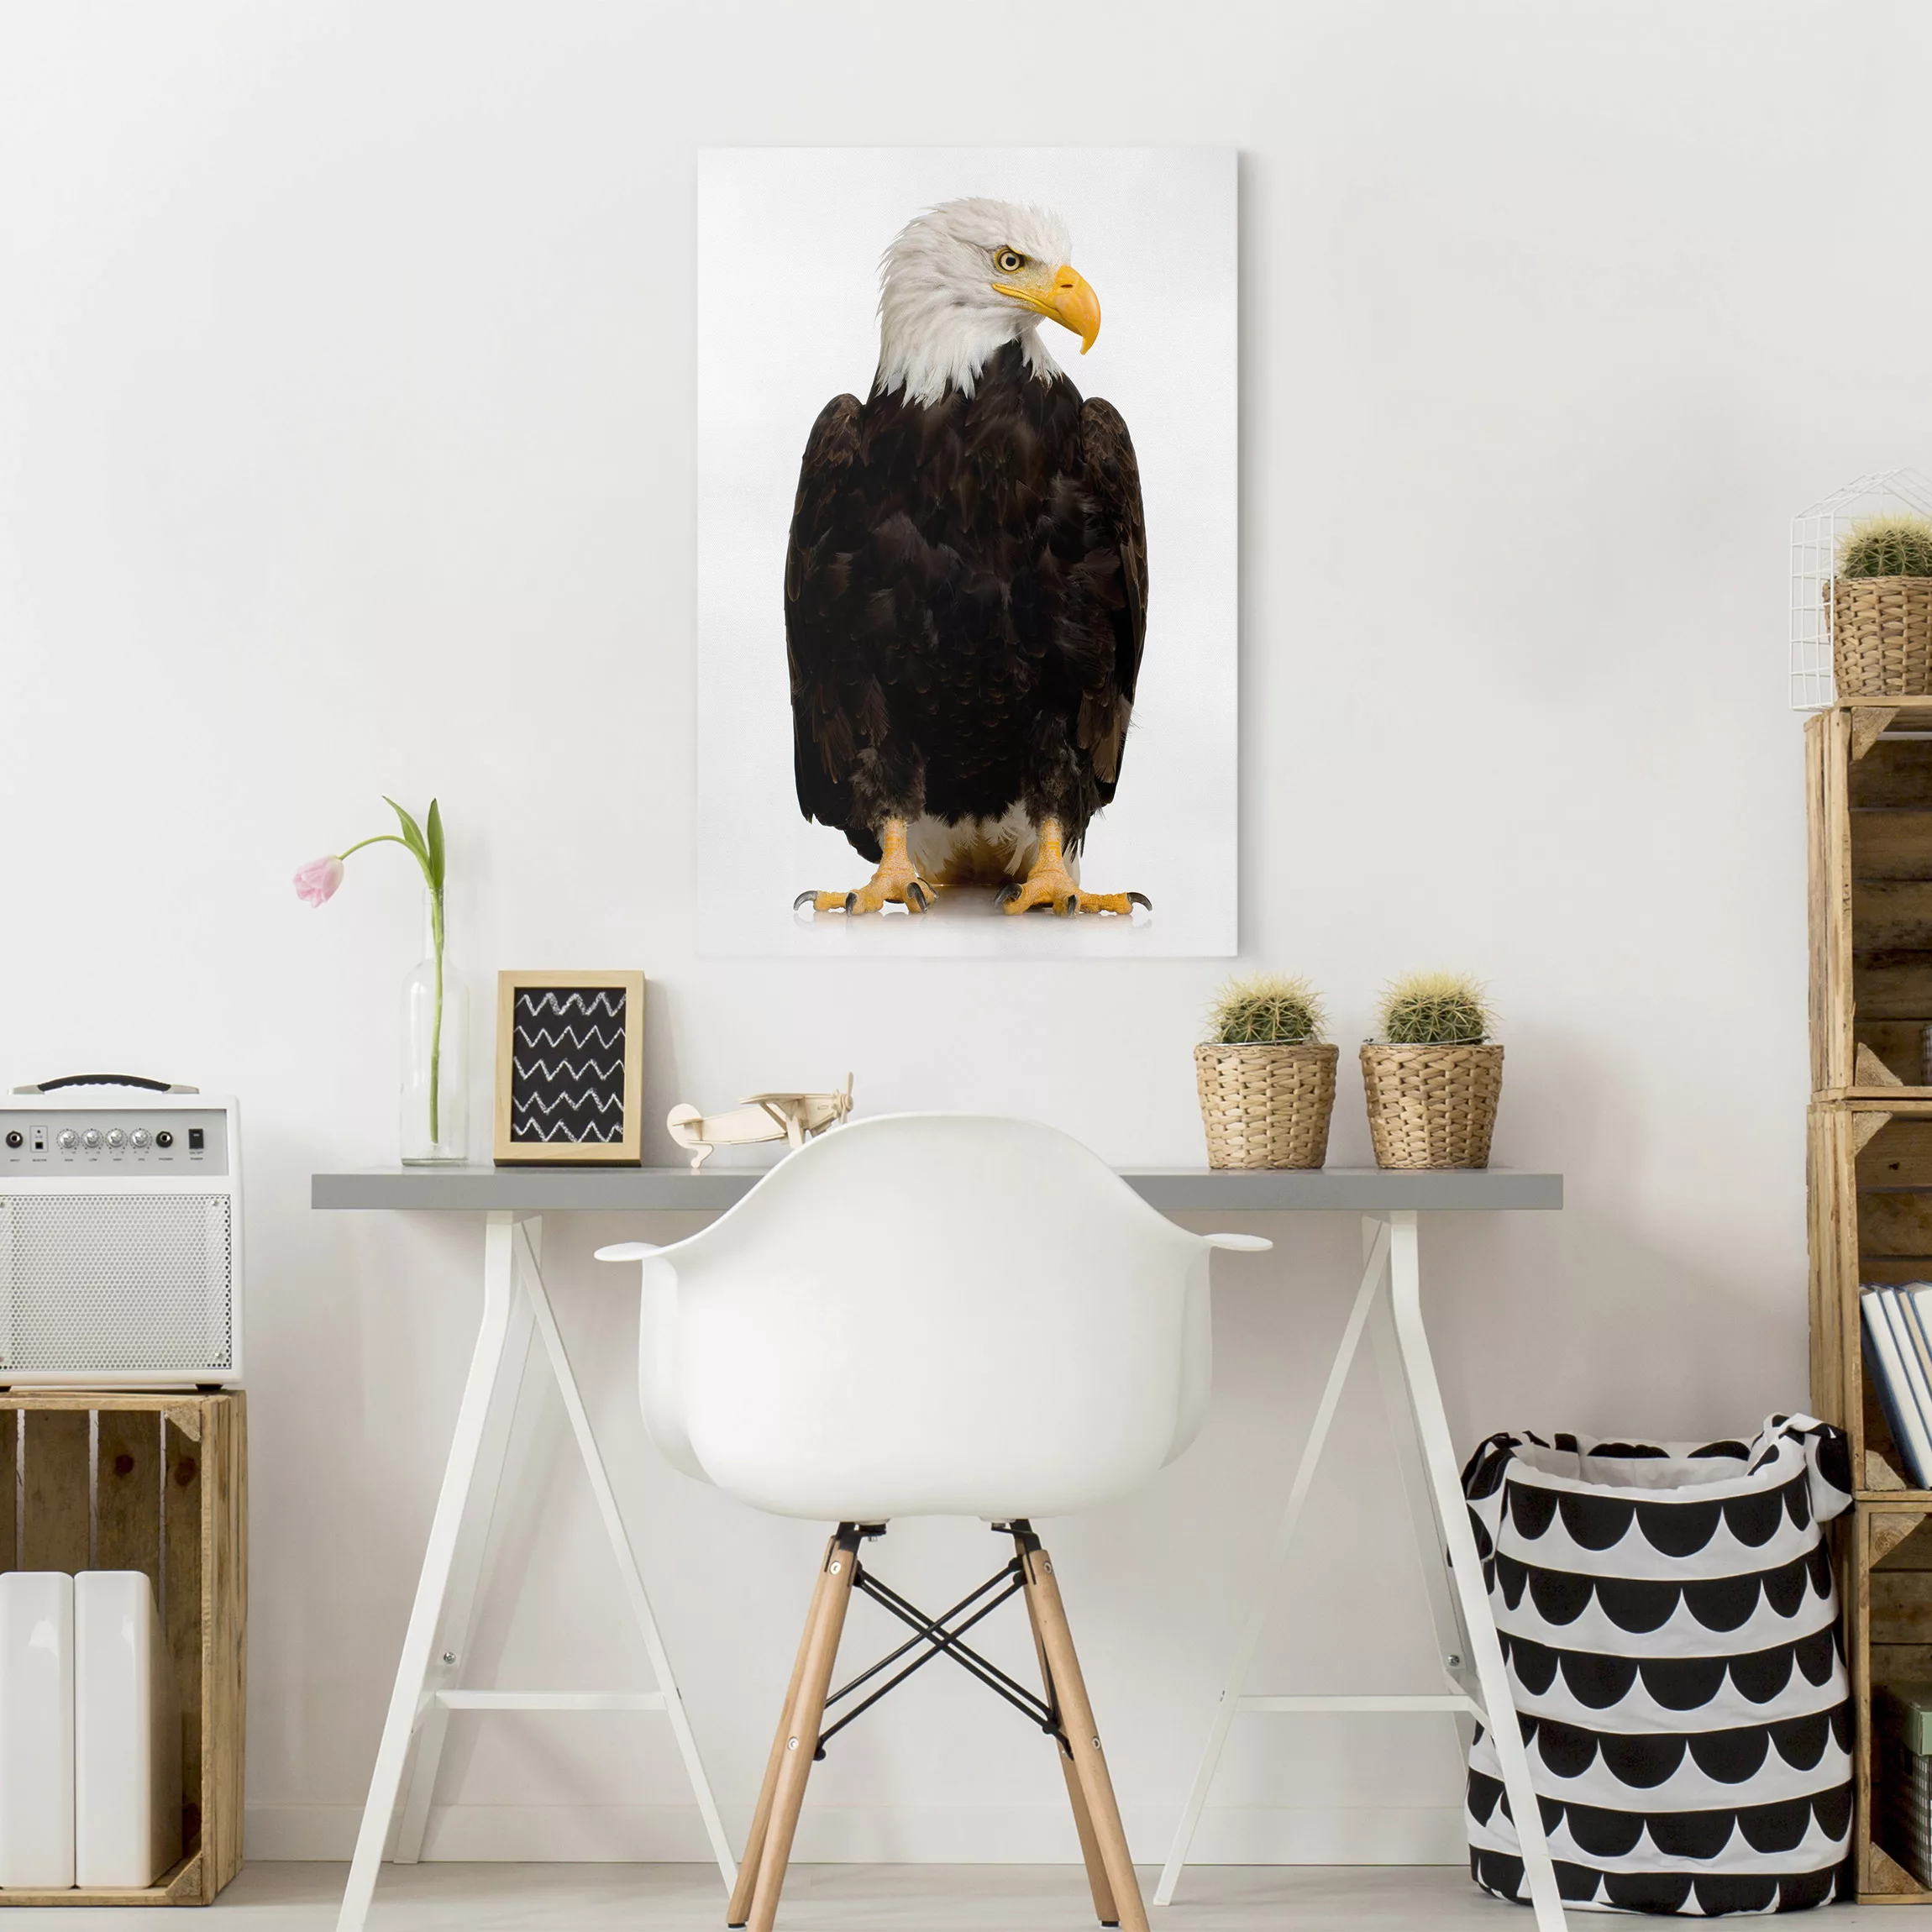 Leinwandbild Tiere - Hochformat Eye of the Eagle günstig online kaufen